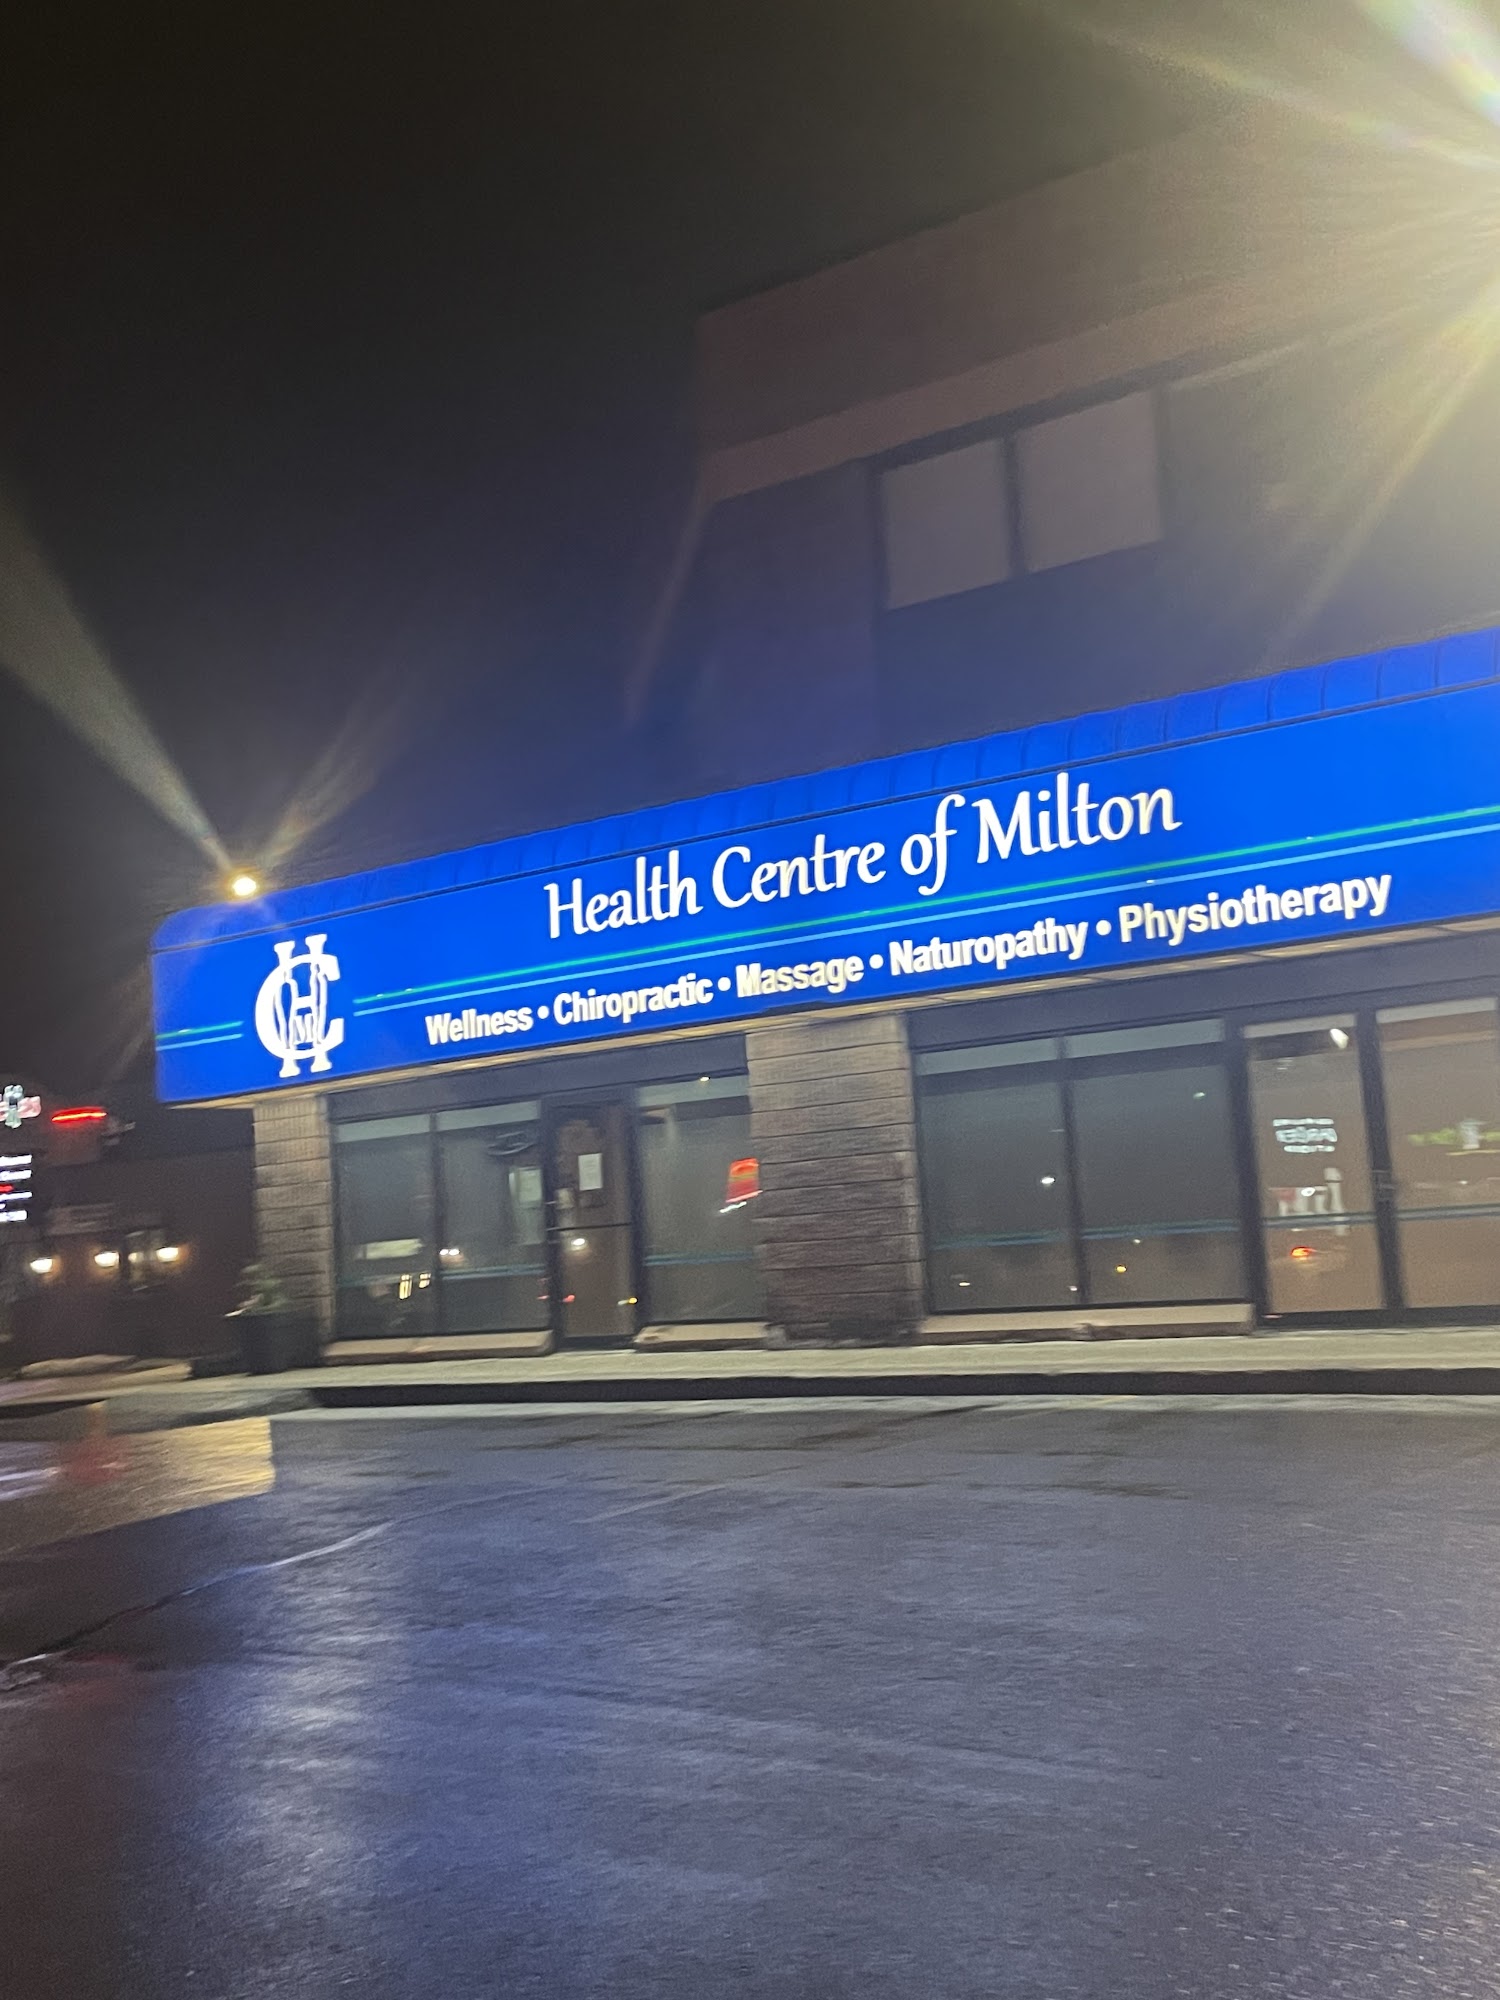 Health Centre of Milton